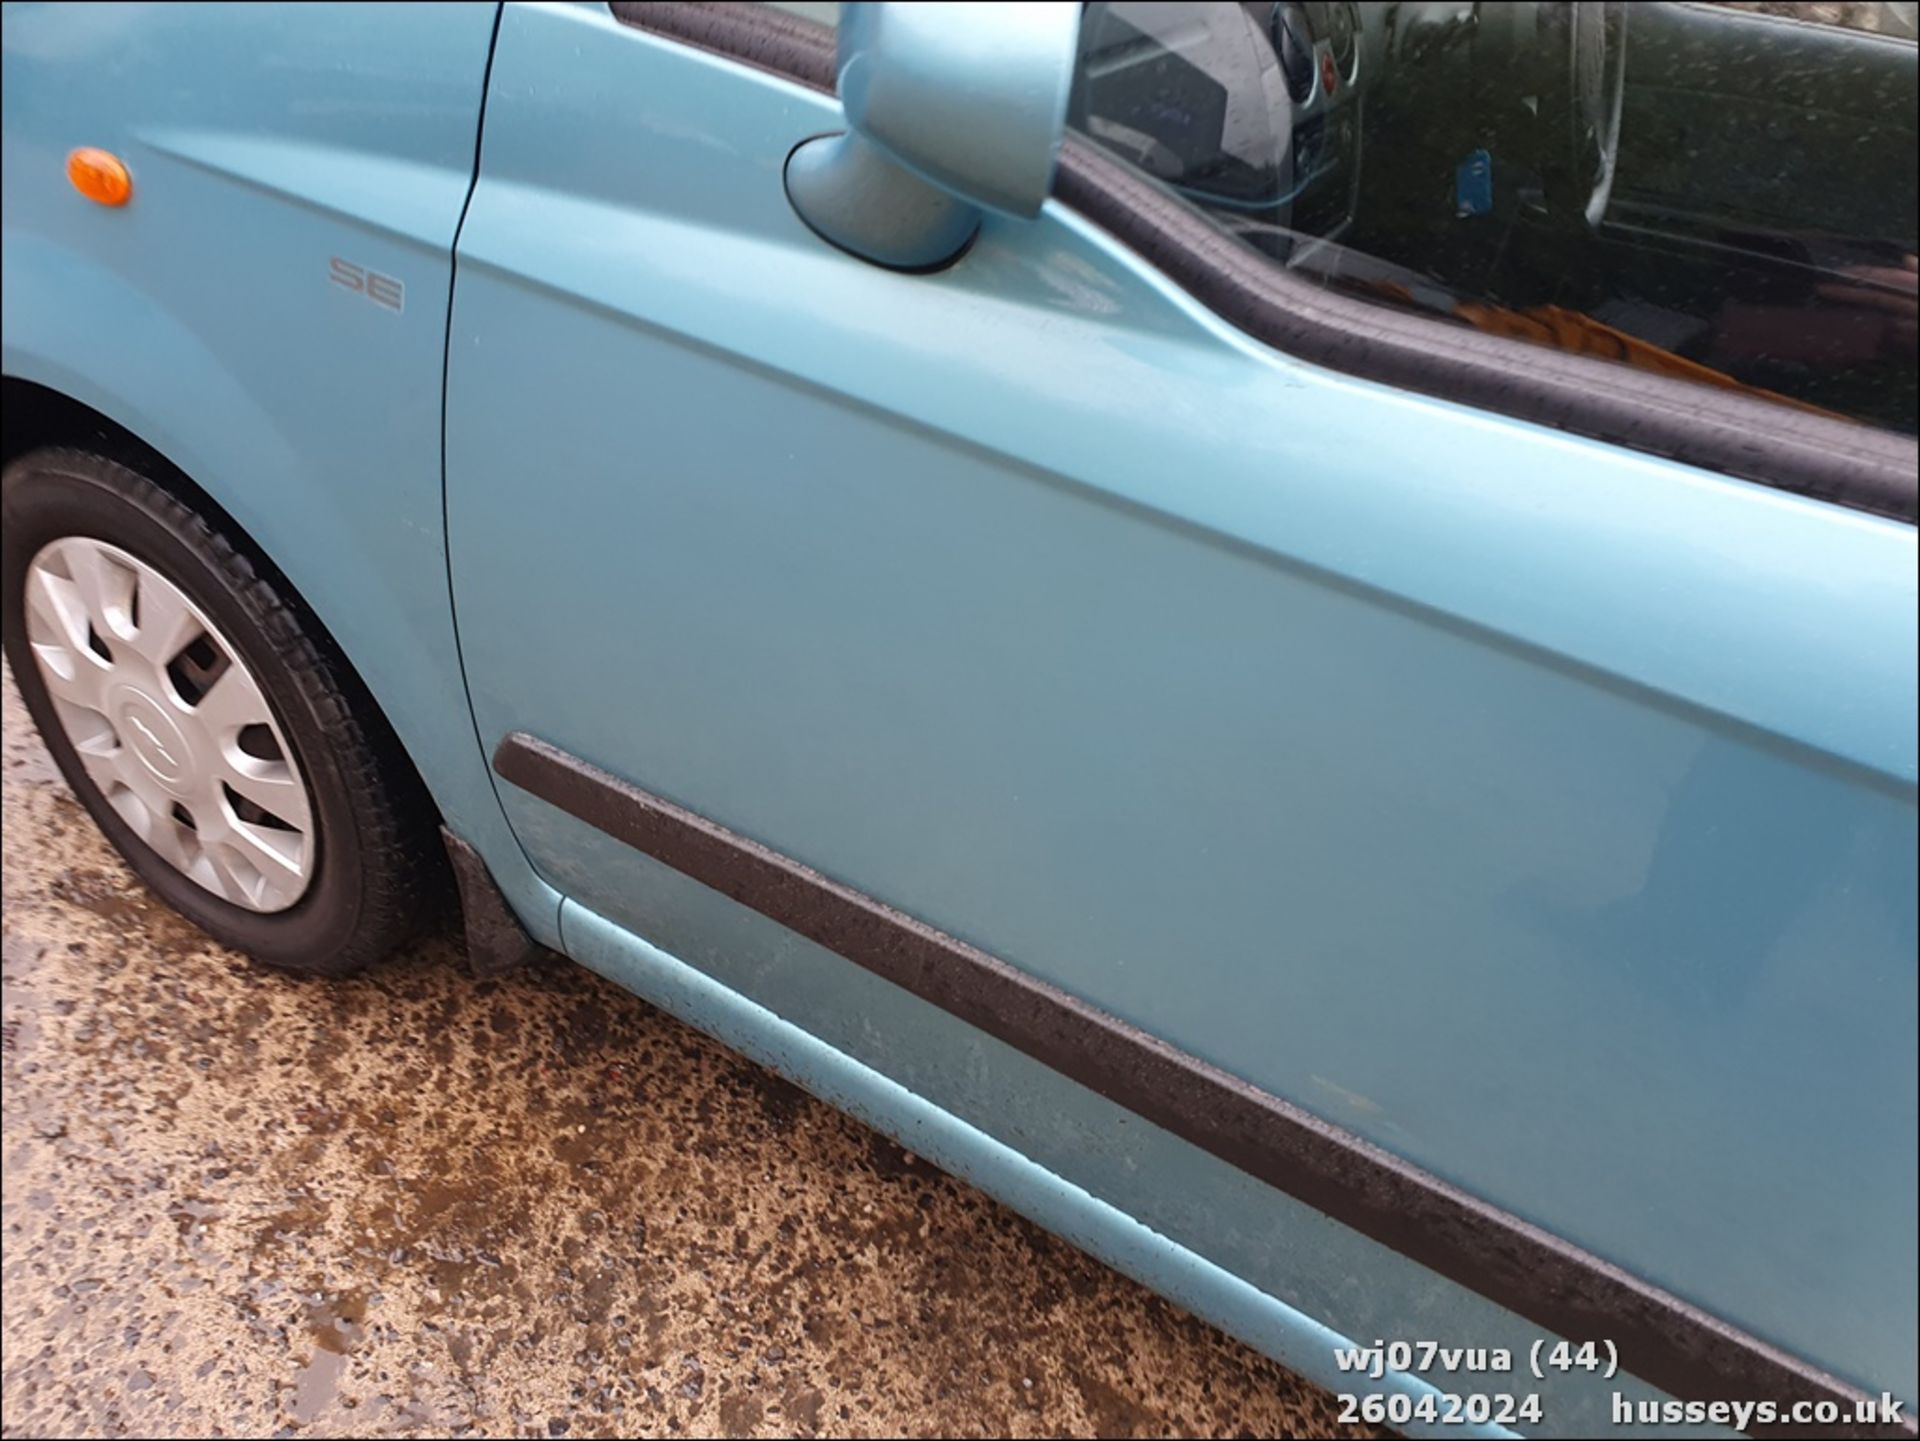 07/07 CHEVROLET MATIZ SE AUTO - 796cc 5dr Hatchback (Blue, 36k) - Image 45 of 56